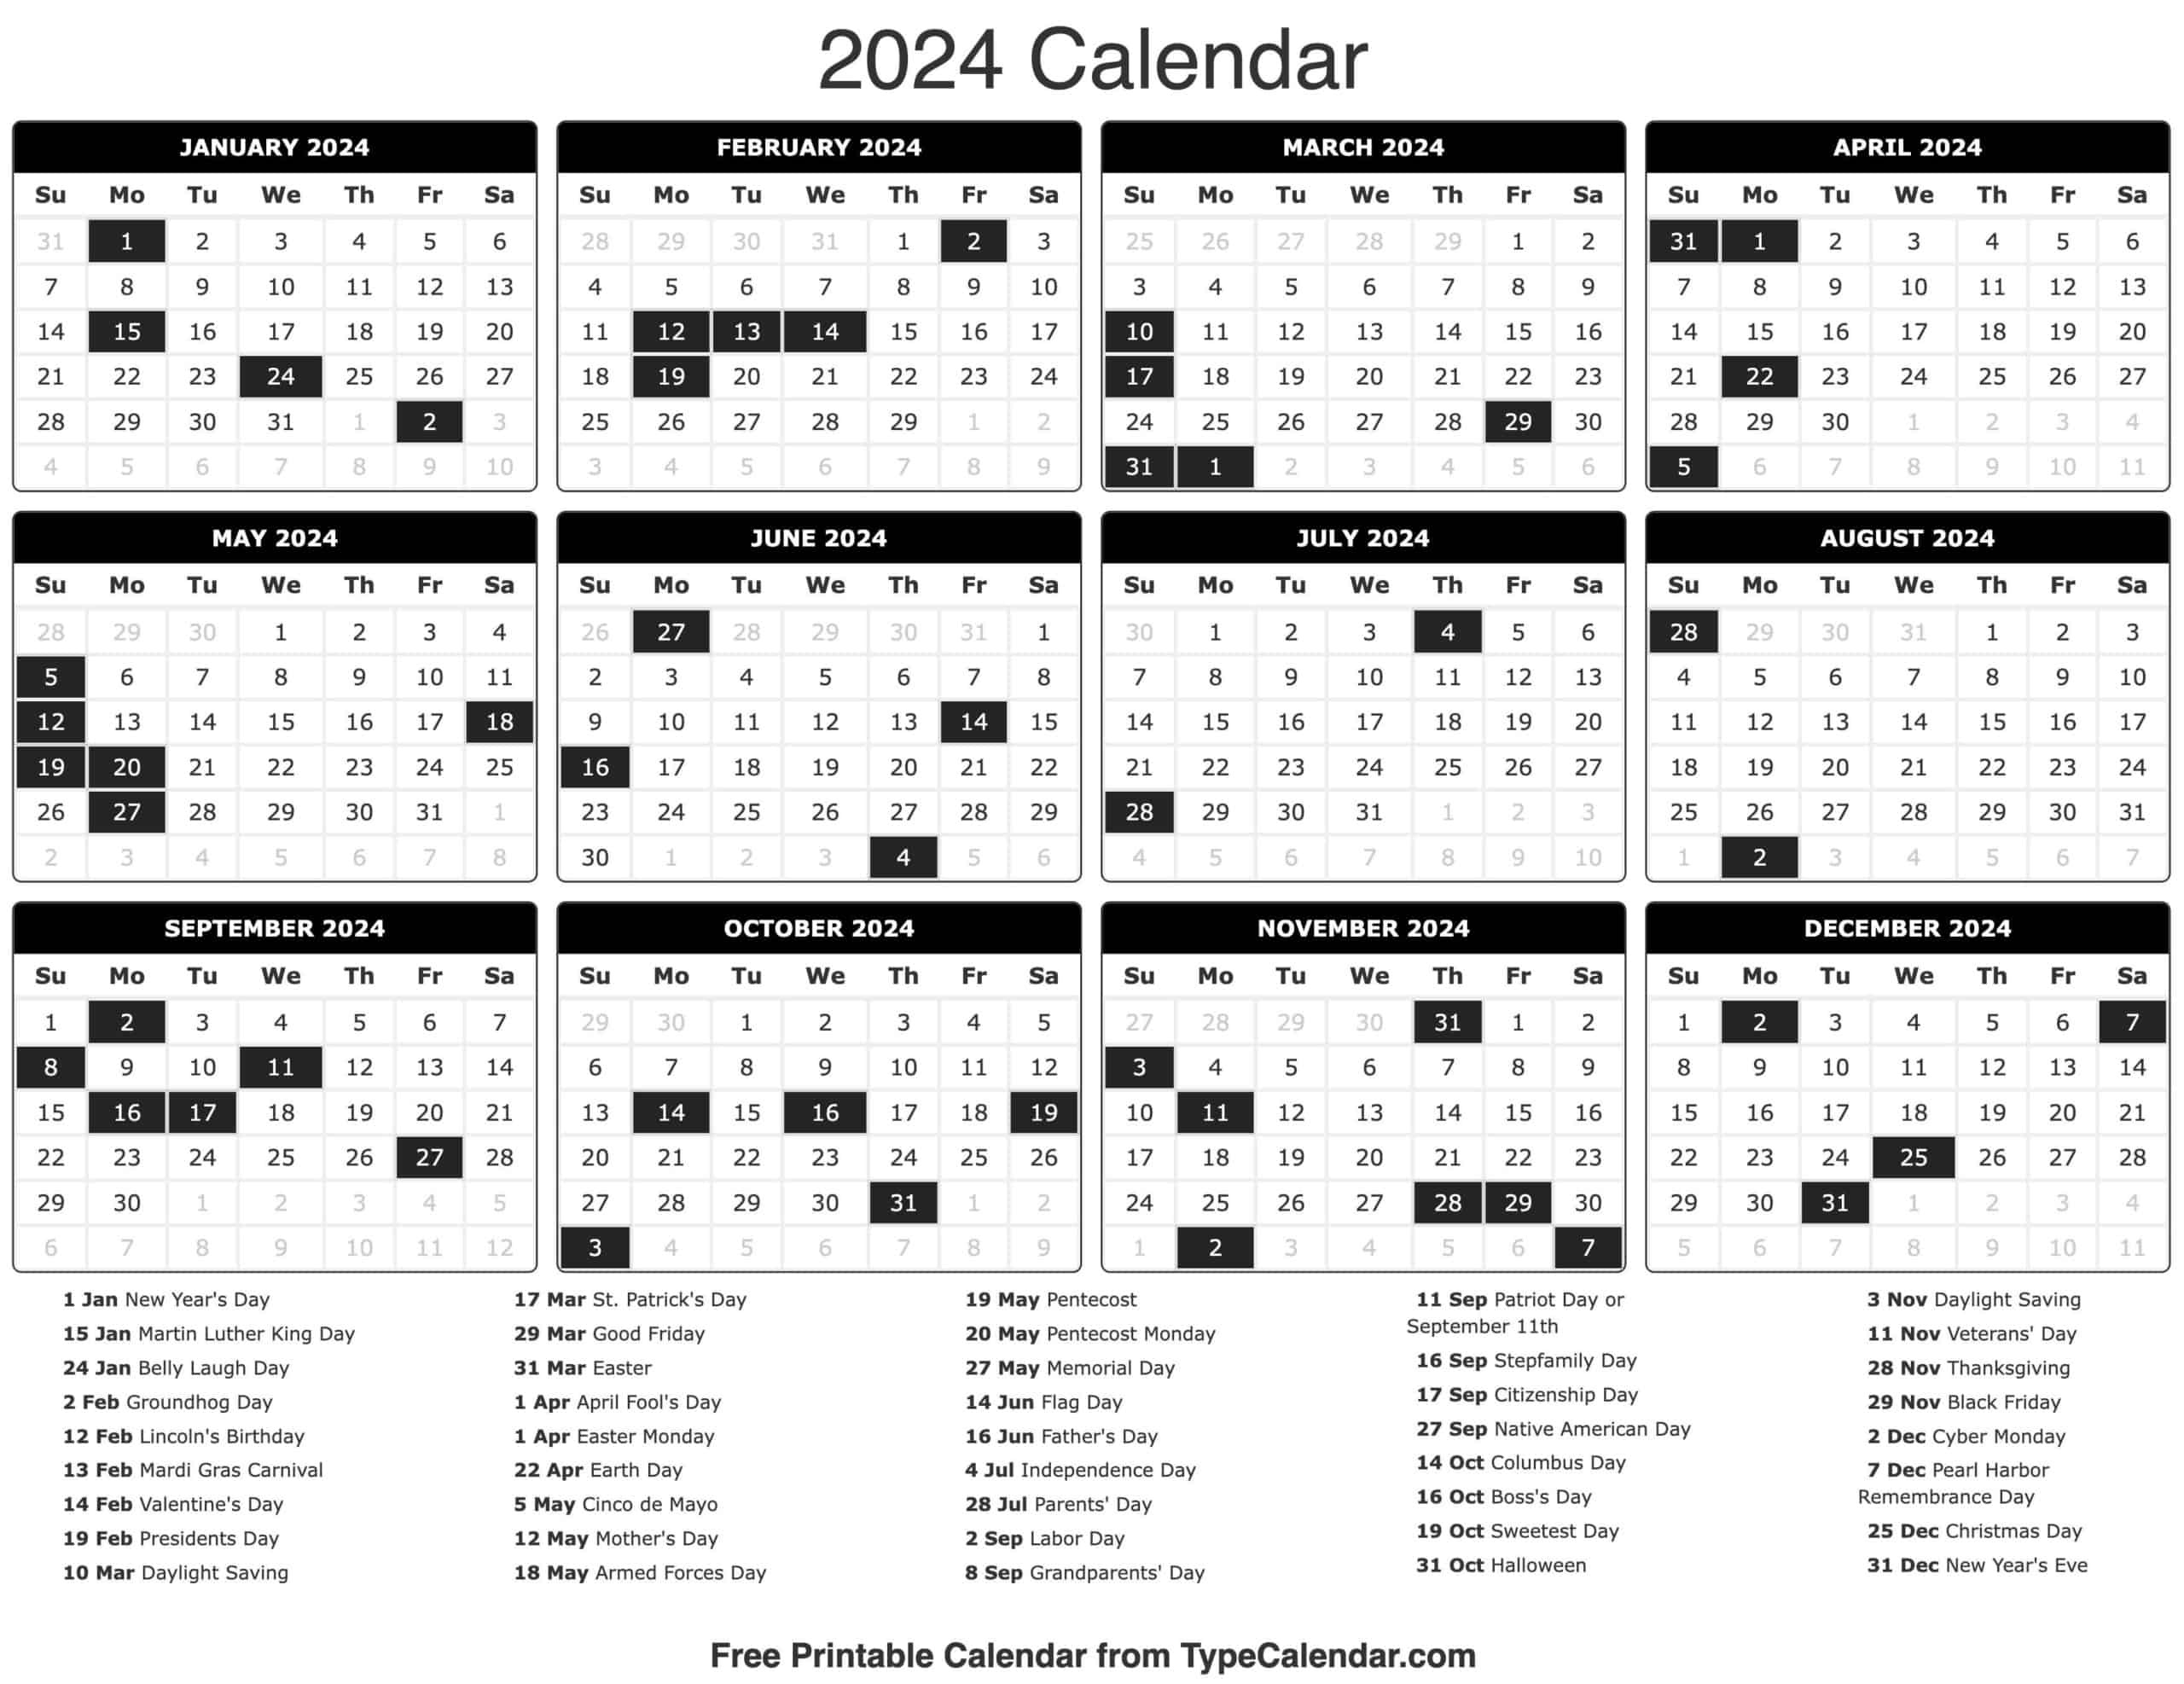 2024 Calendar: Free Printable Calendar With Holidays with regard to Julian Calendar 2024 Easter